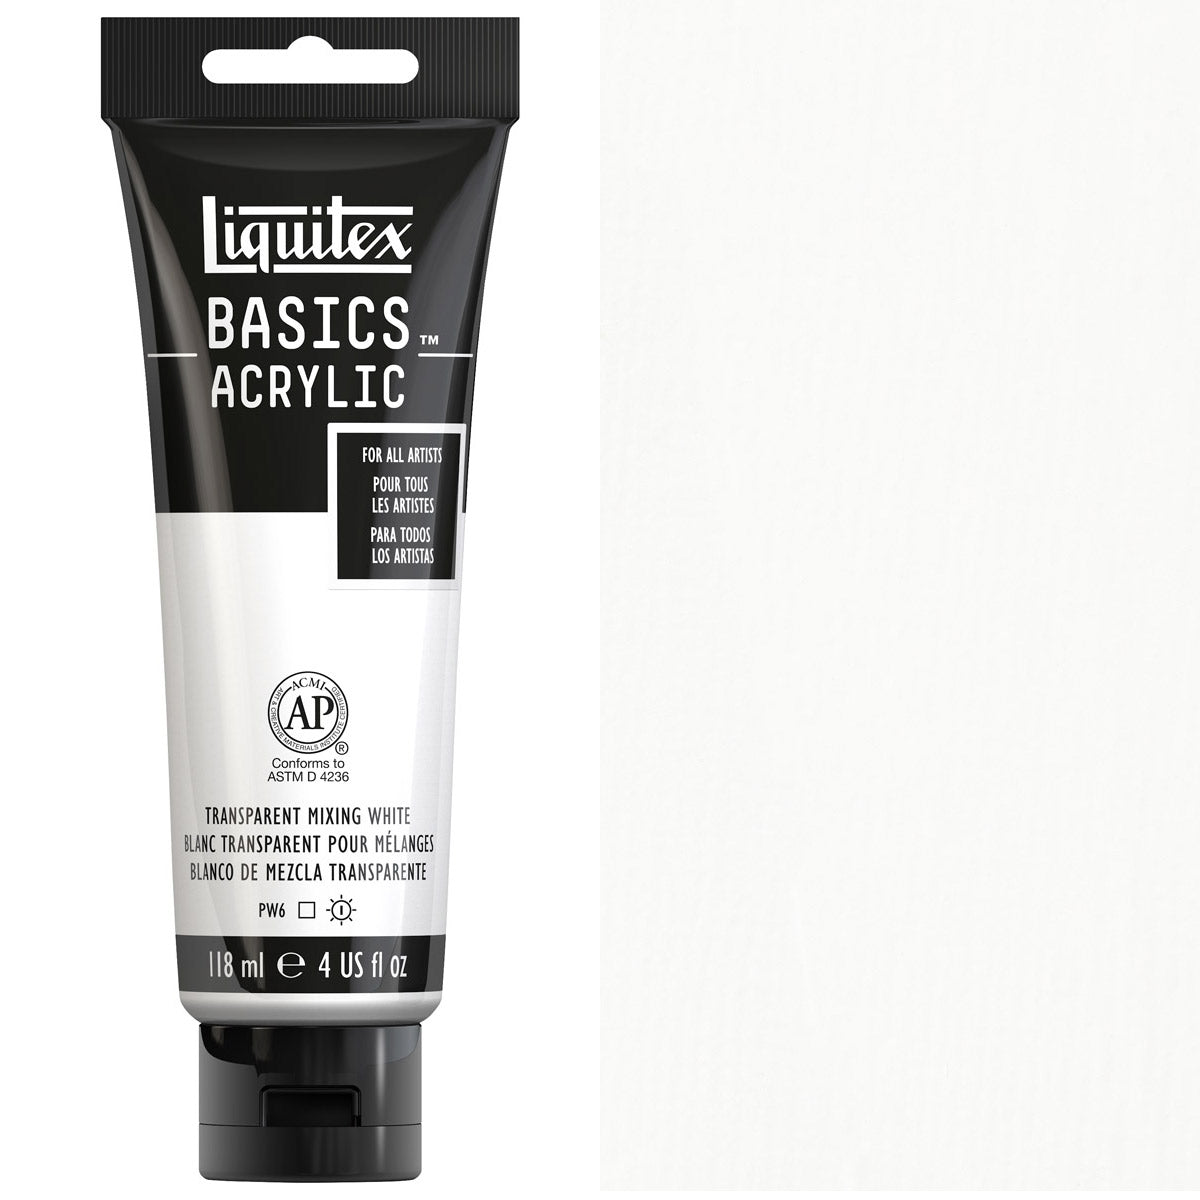 Liquitex - Basics Acrylic Colour - 118ml - Transparent Mixing White